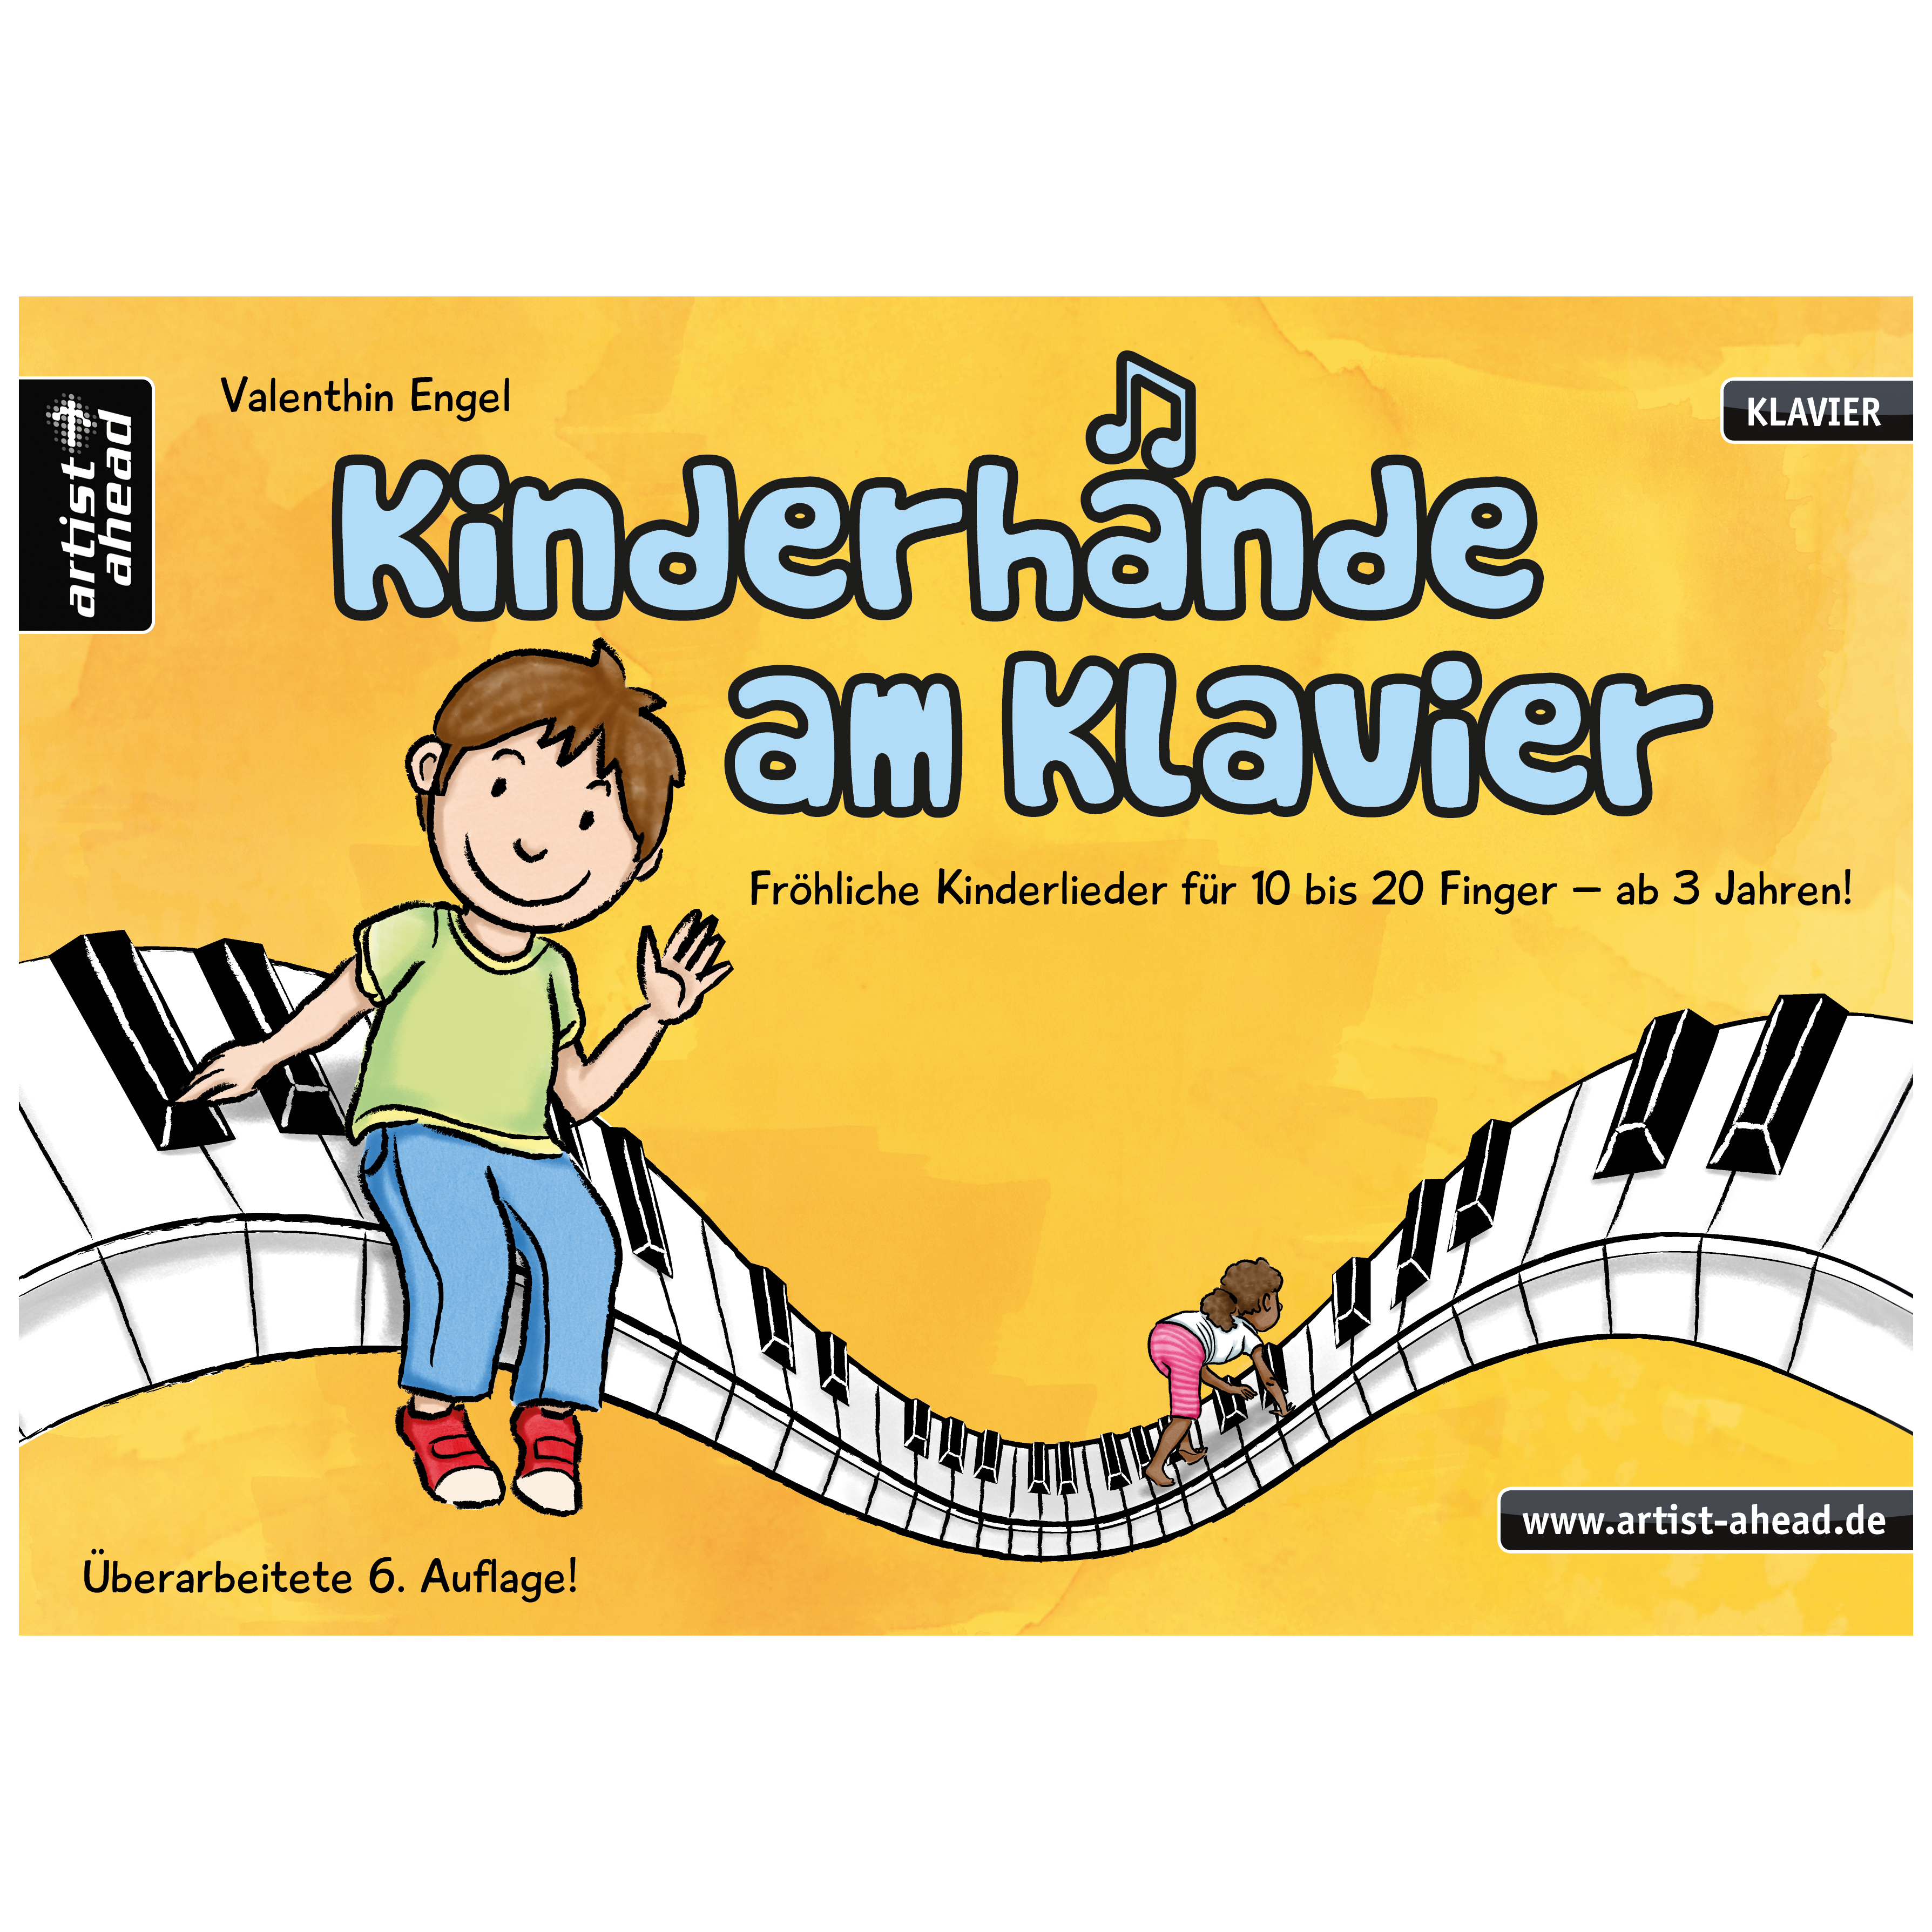 Artist Ahead Kinderhände am Klavier - Valenthin Engel